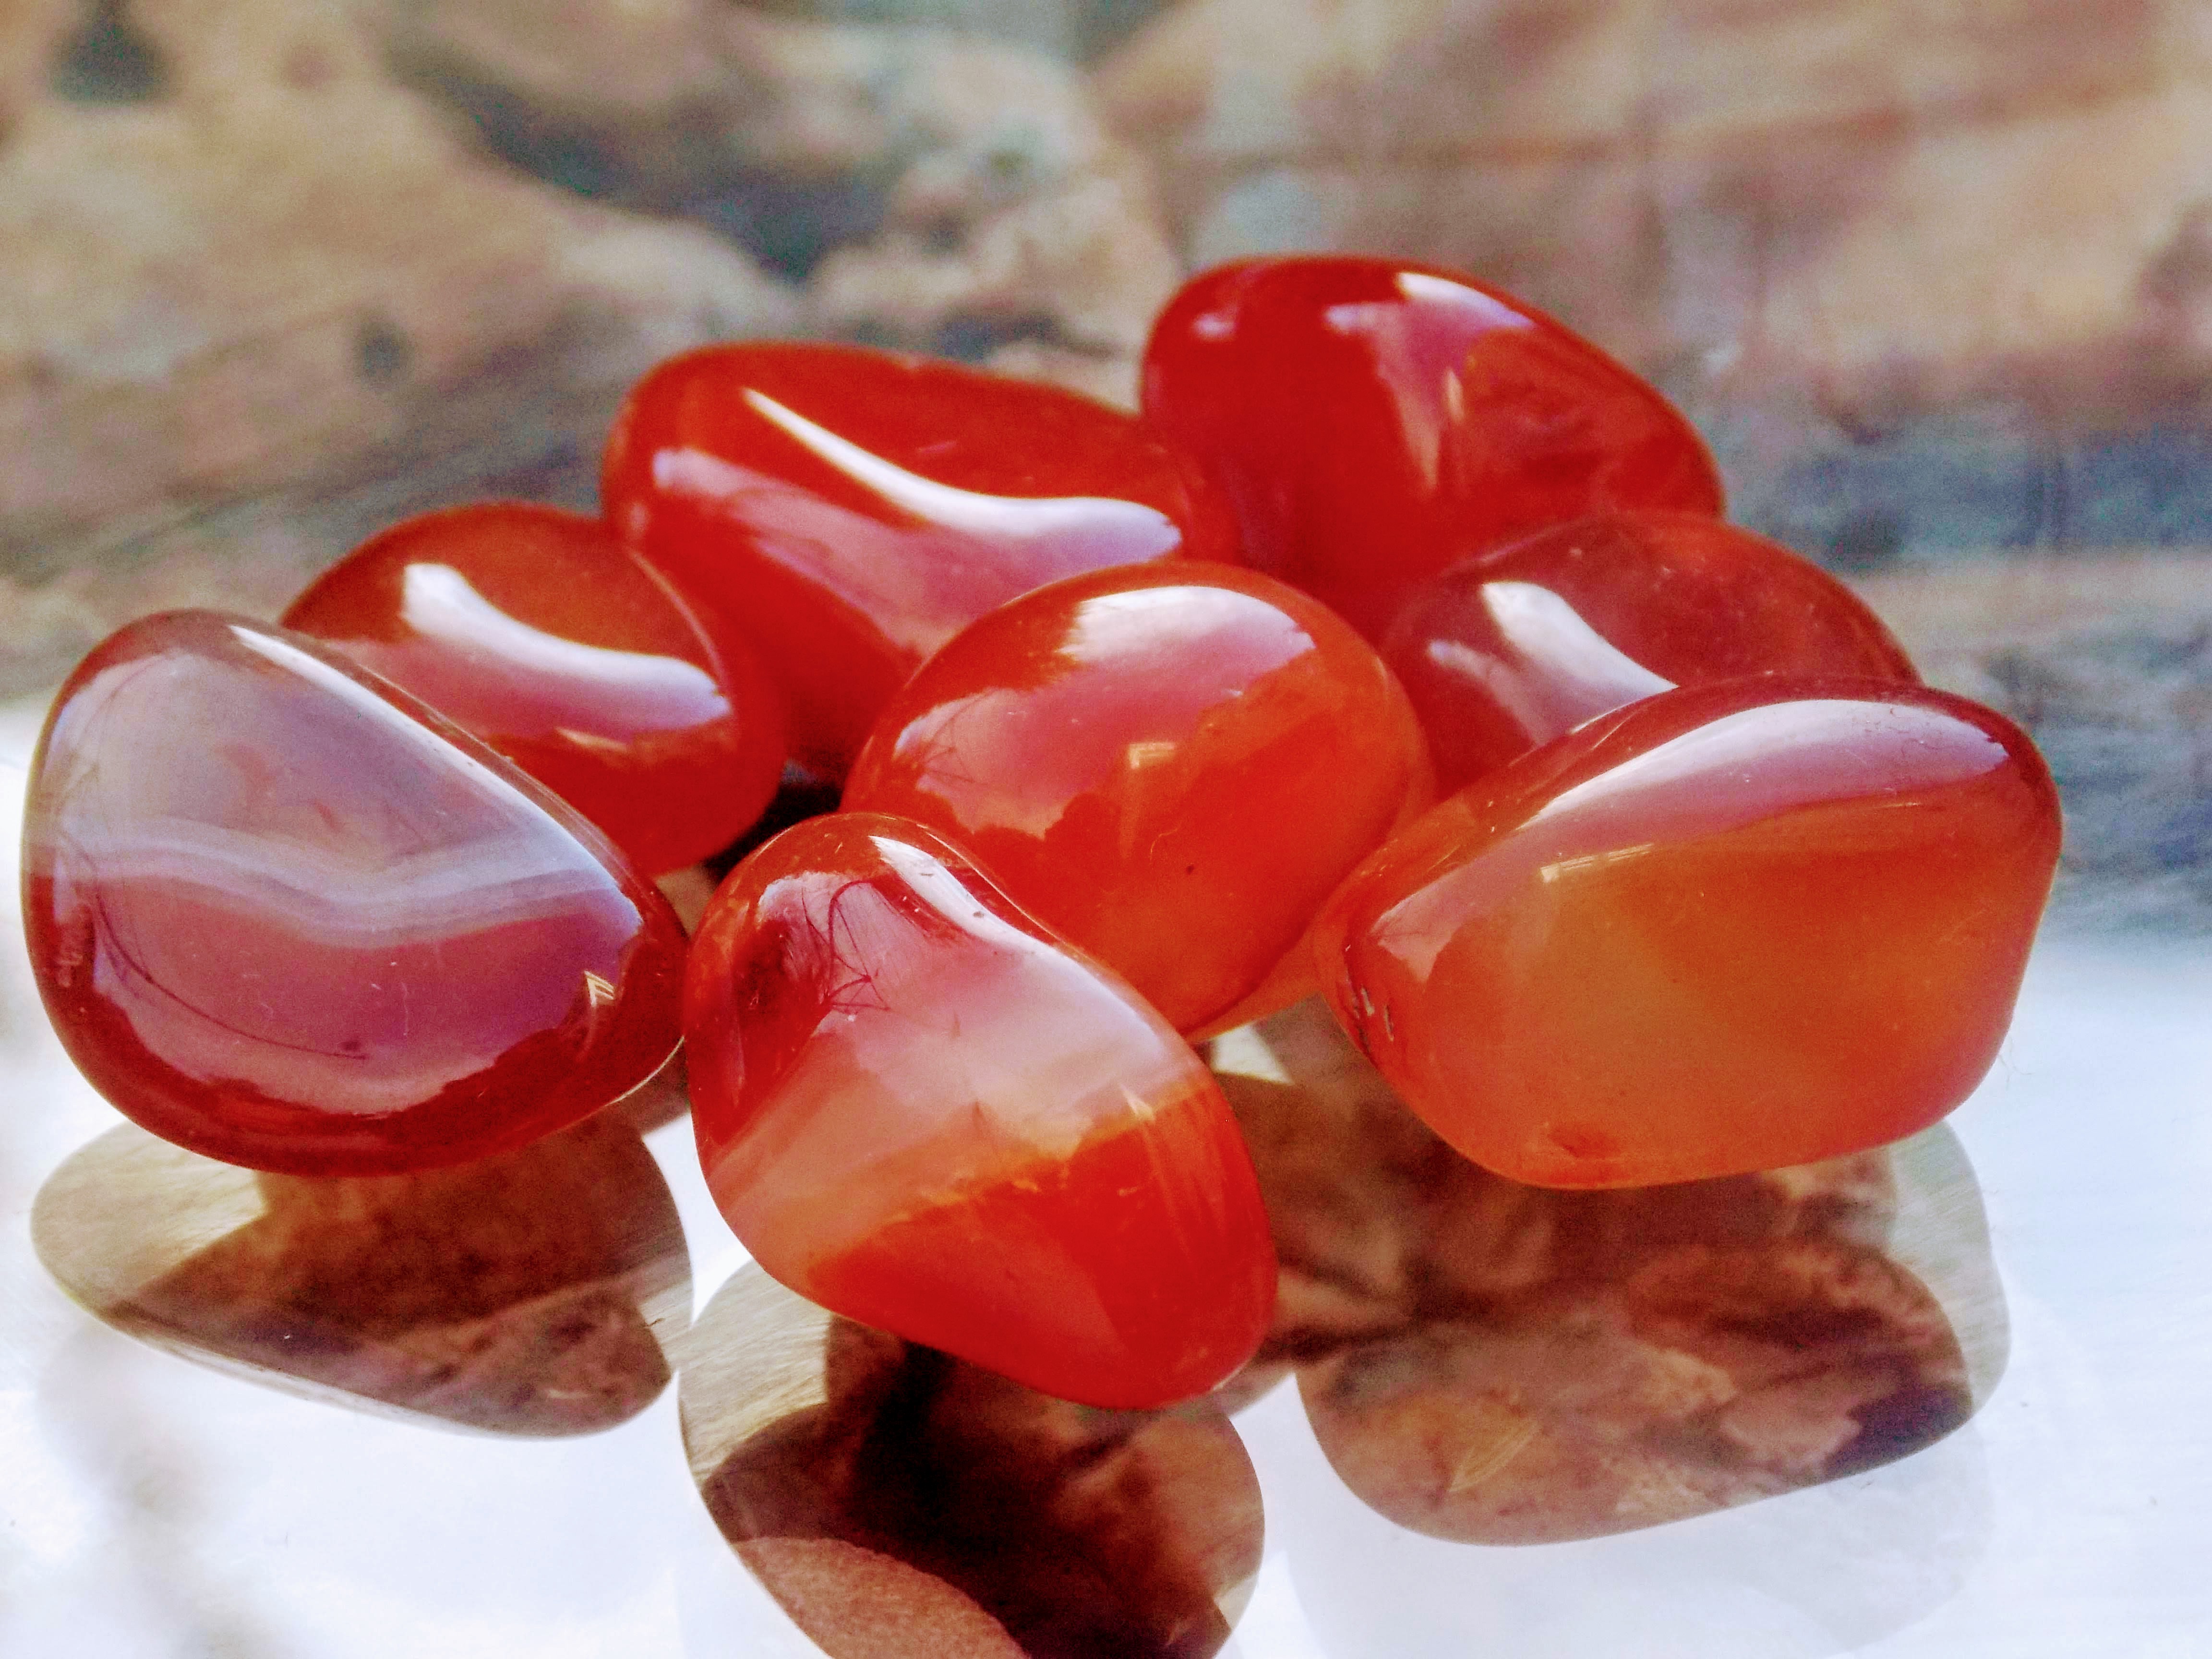 Red Carnelian Polished Stones